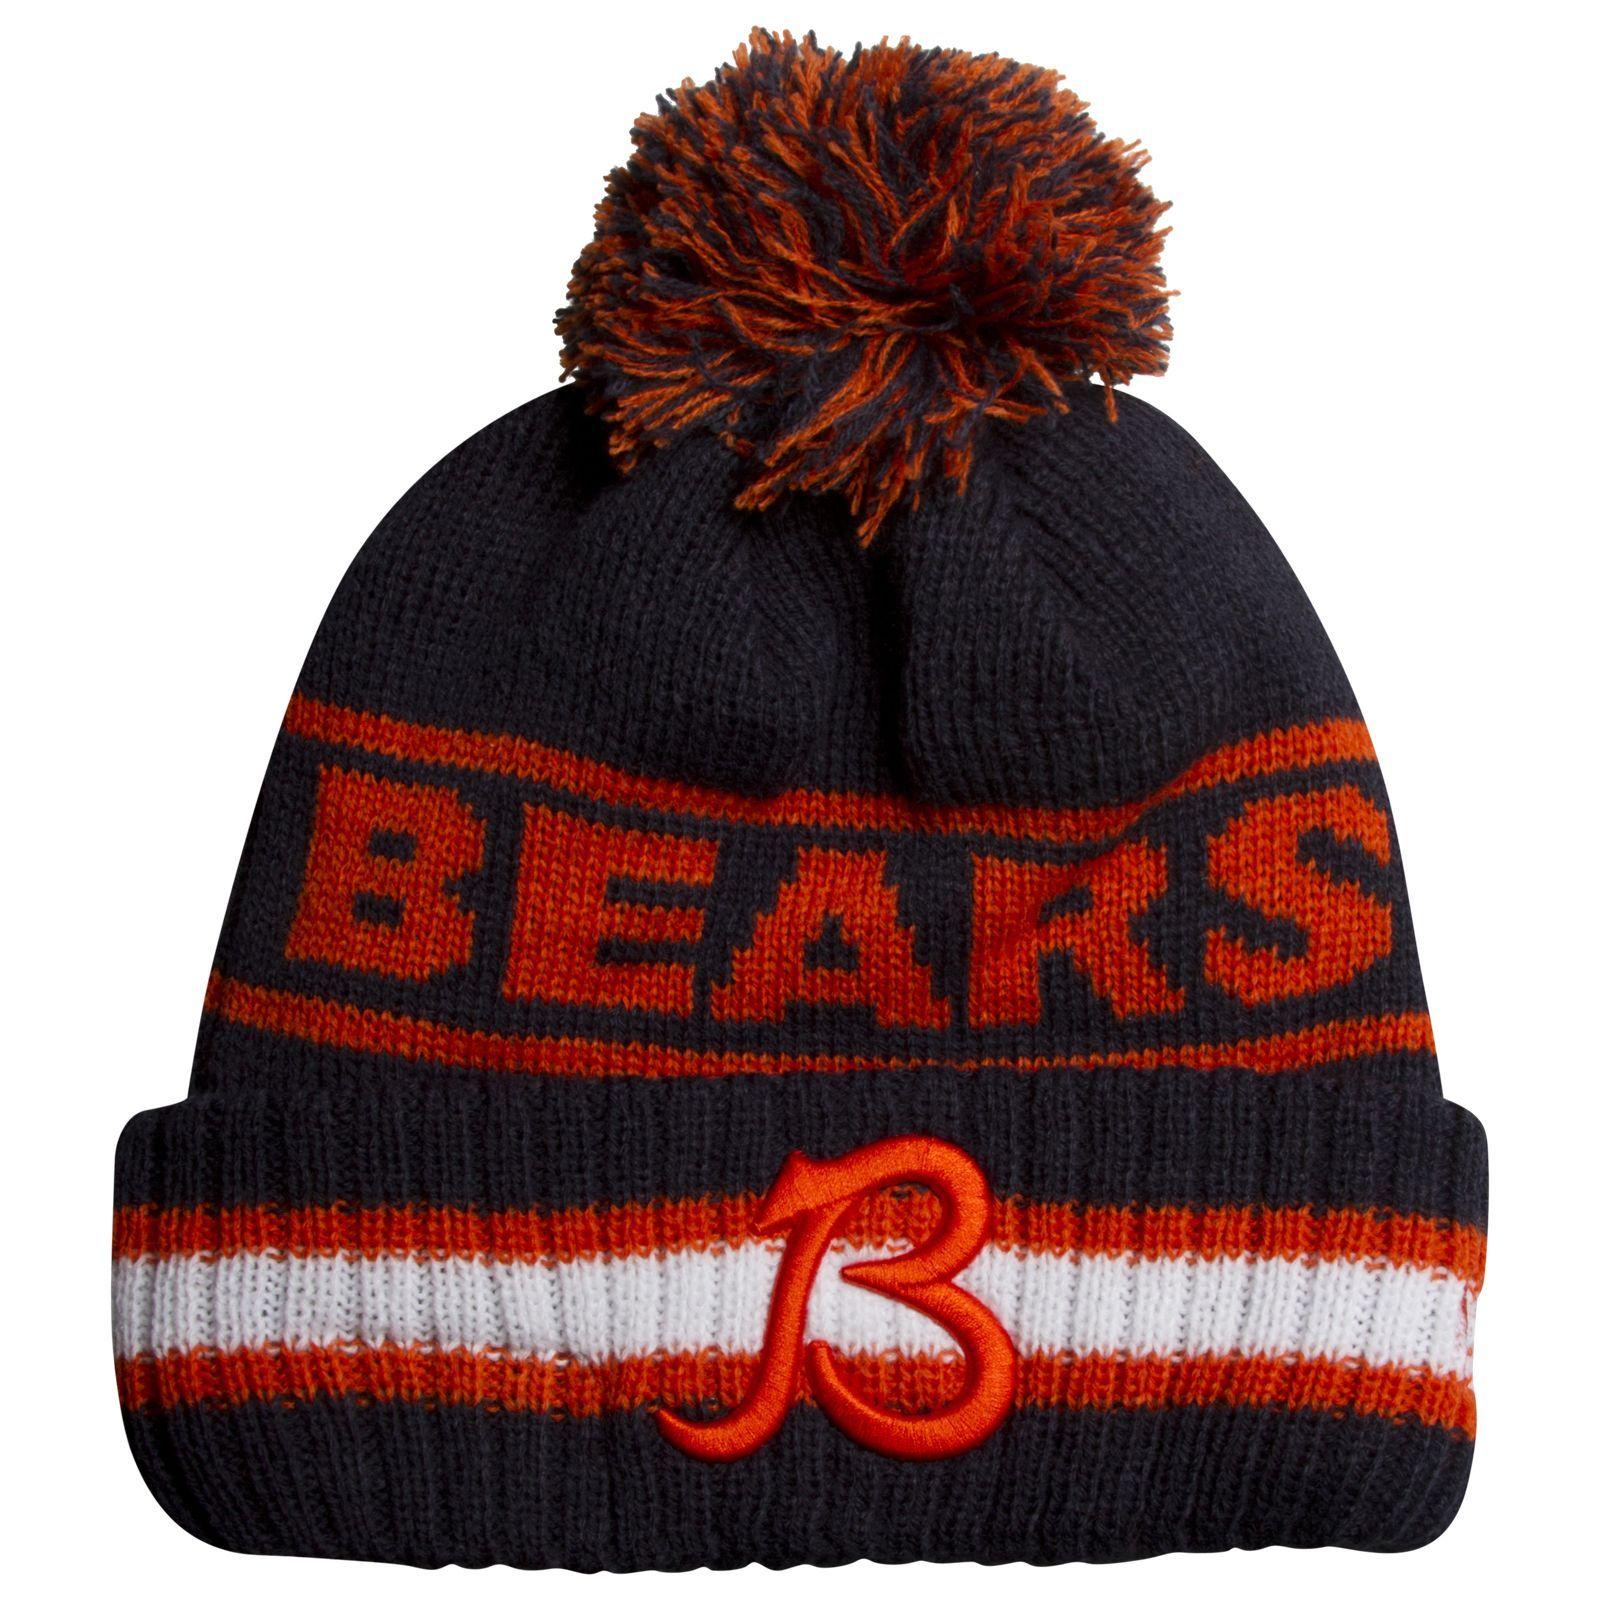 White with Orange B Logo - Chicago Bears Navy, White, and Orange Wordmark and Alternate 